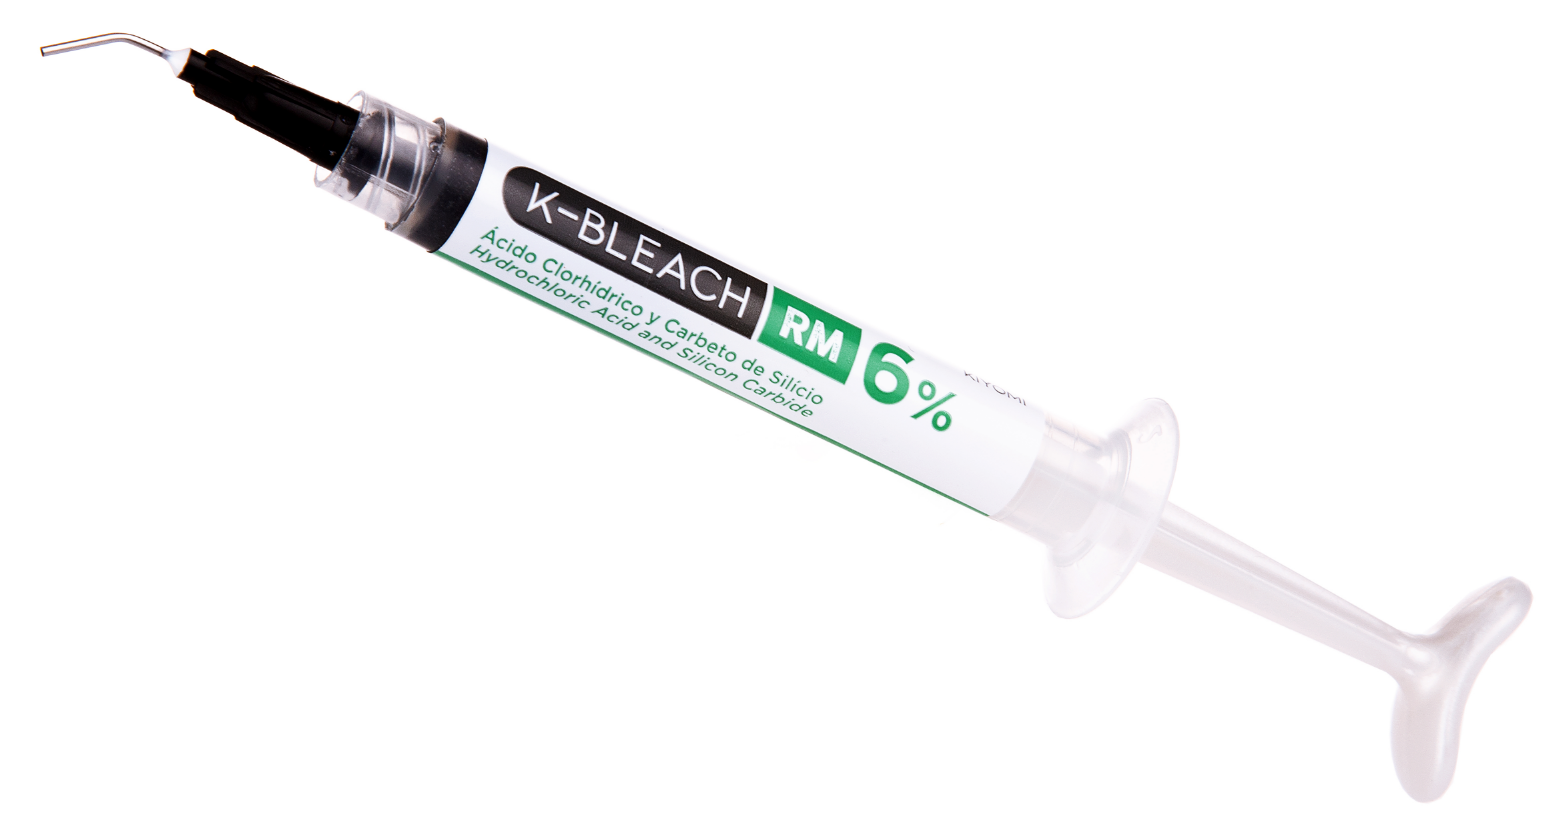 k-bleach rm acido clorhidrico hipoplasia dental hipoplasia de esmalte carburo de silicio